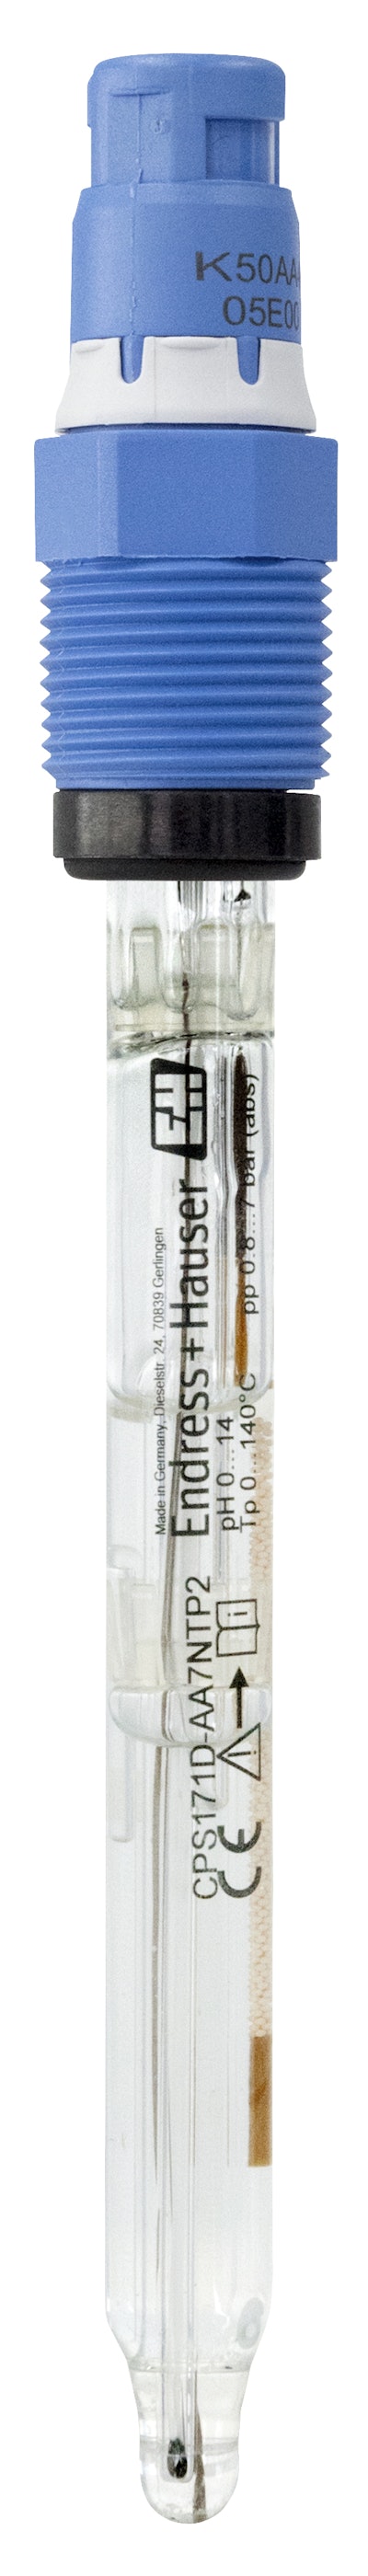 Endress+Hauser Memosens CPS171D pH Electrode